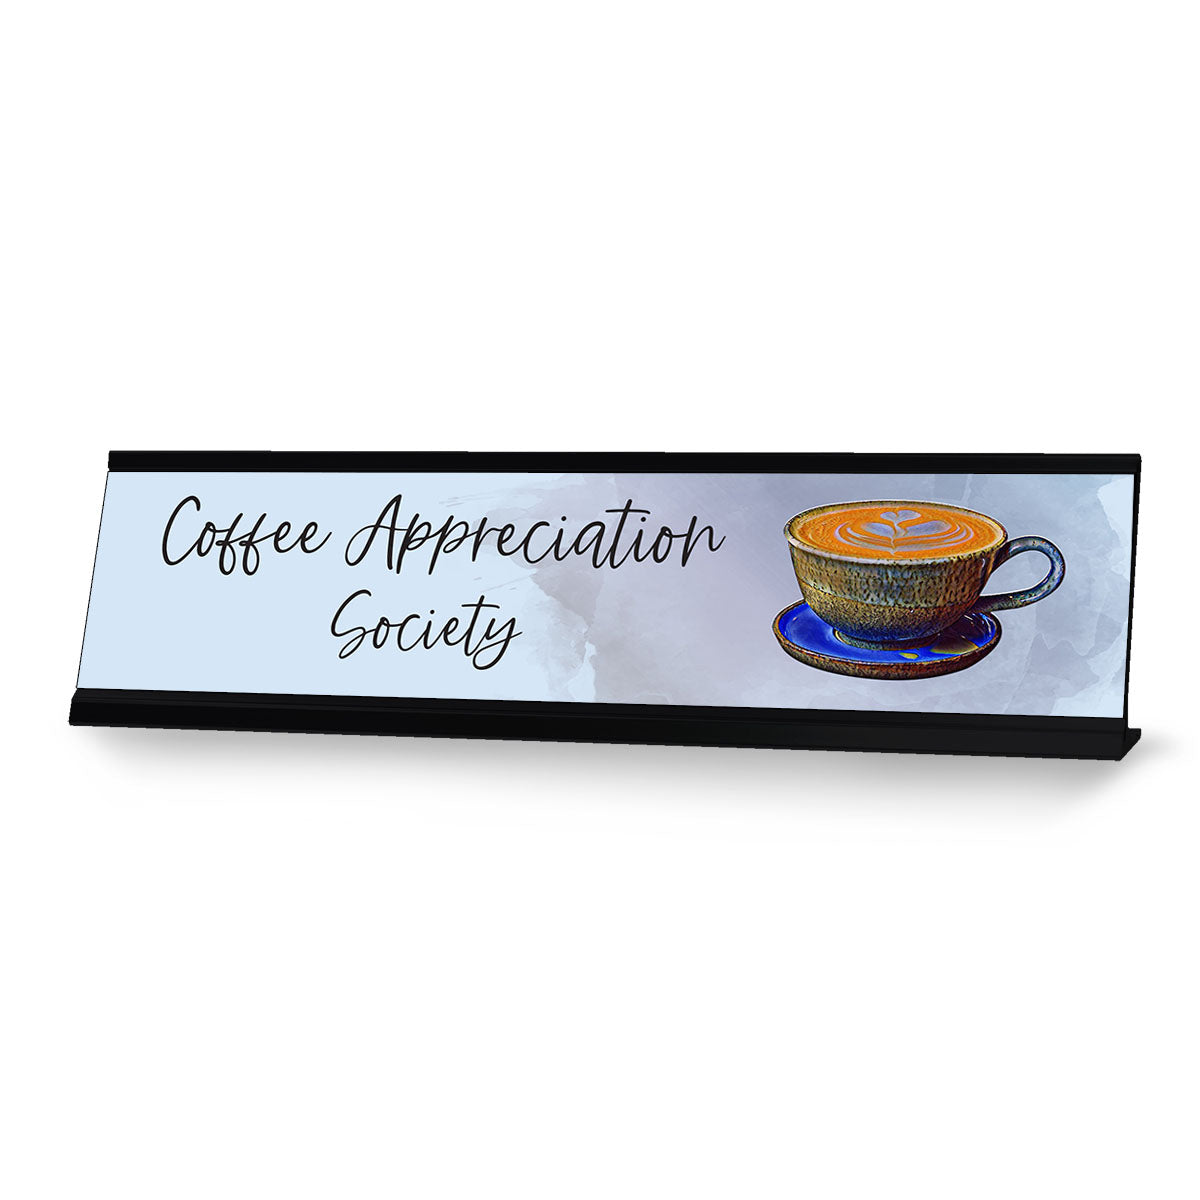 Coffee Appreciation Society, Designer Series Desk Sign Nameplate (2 x 8")